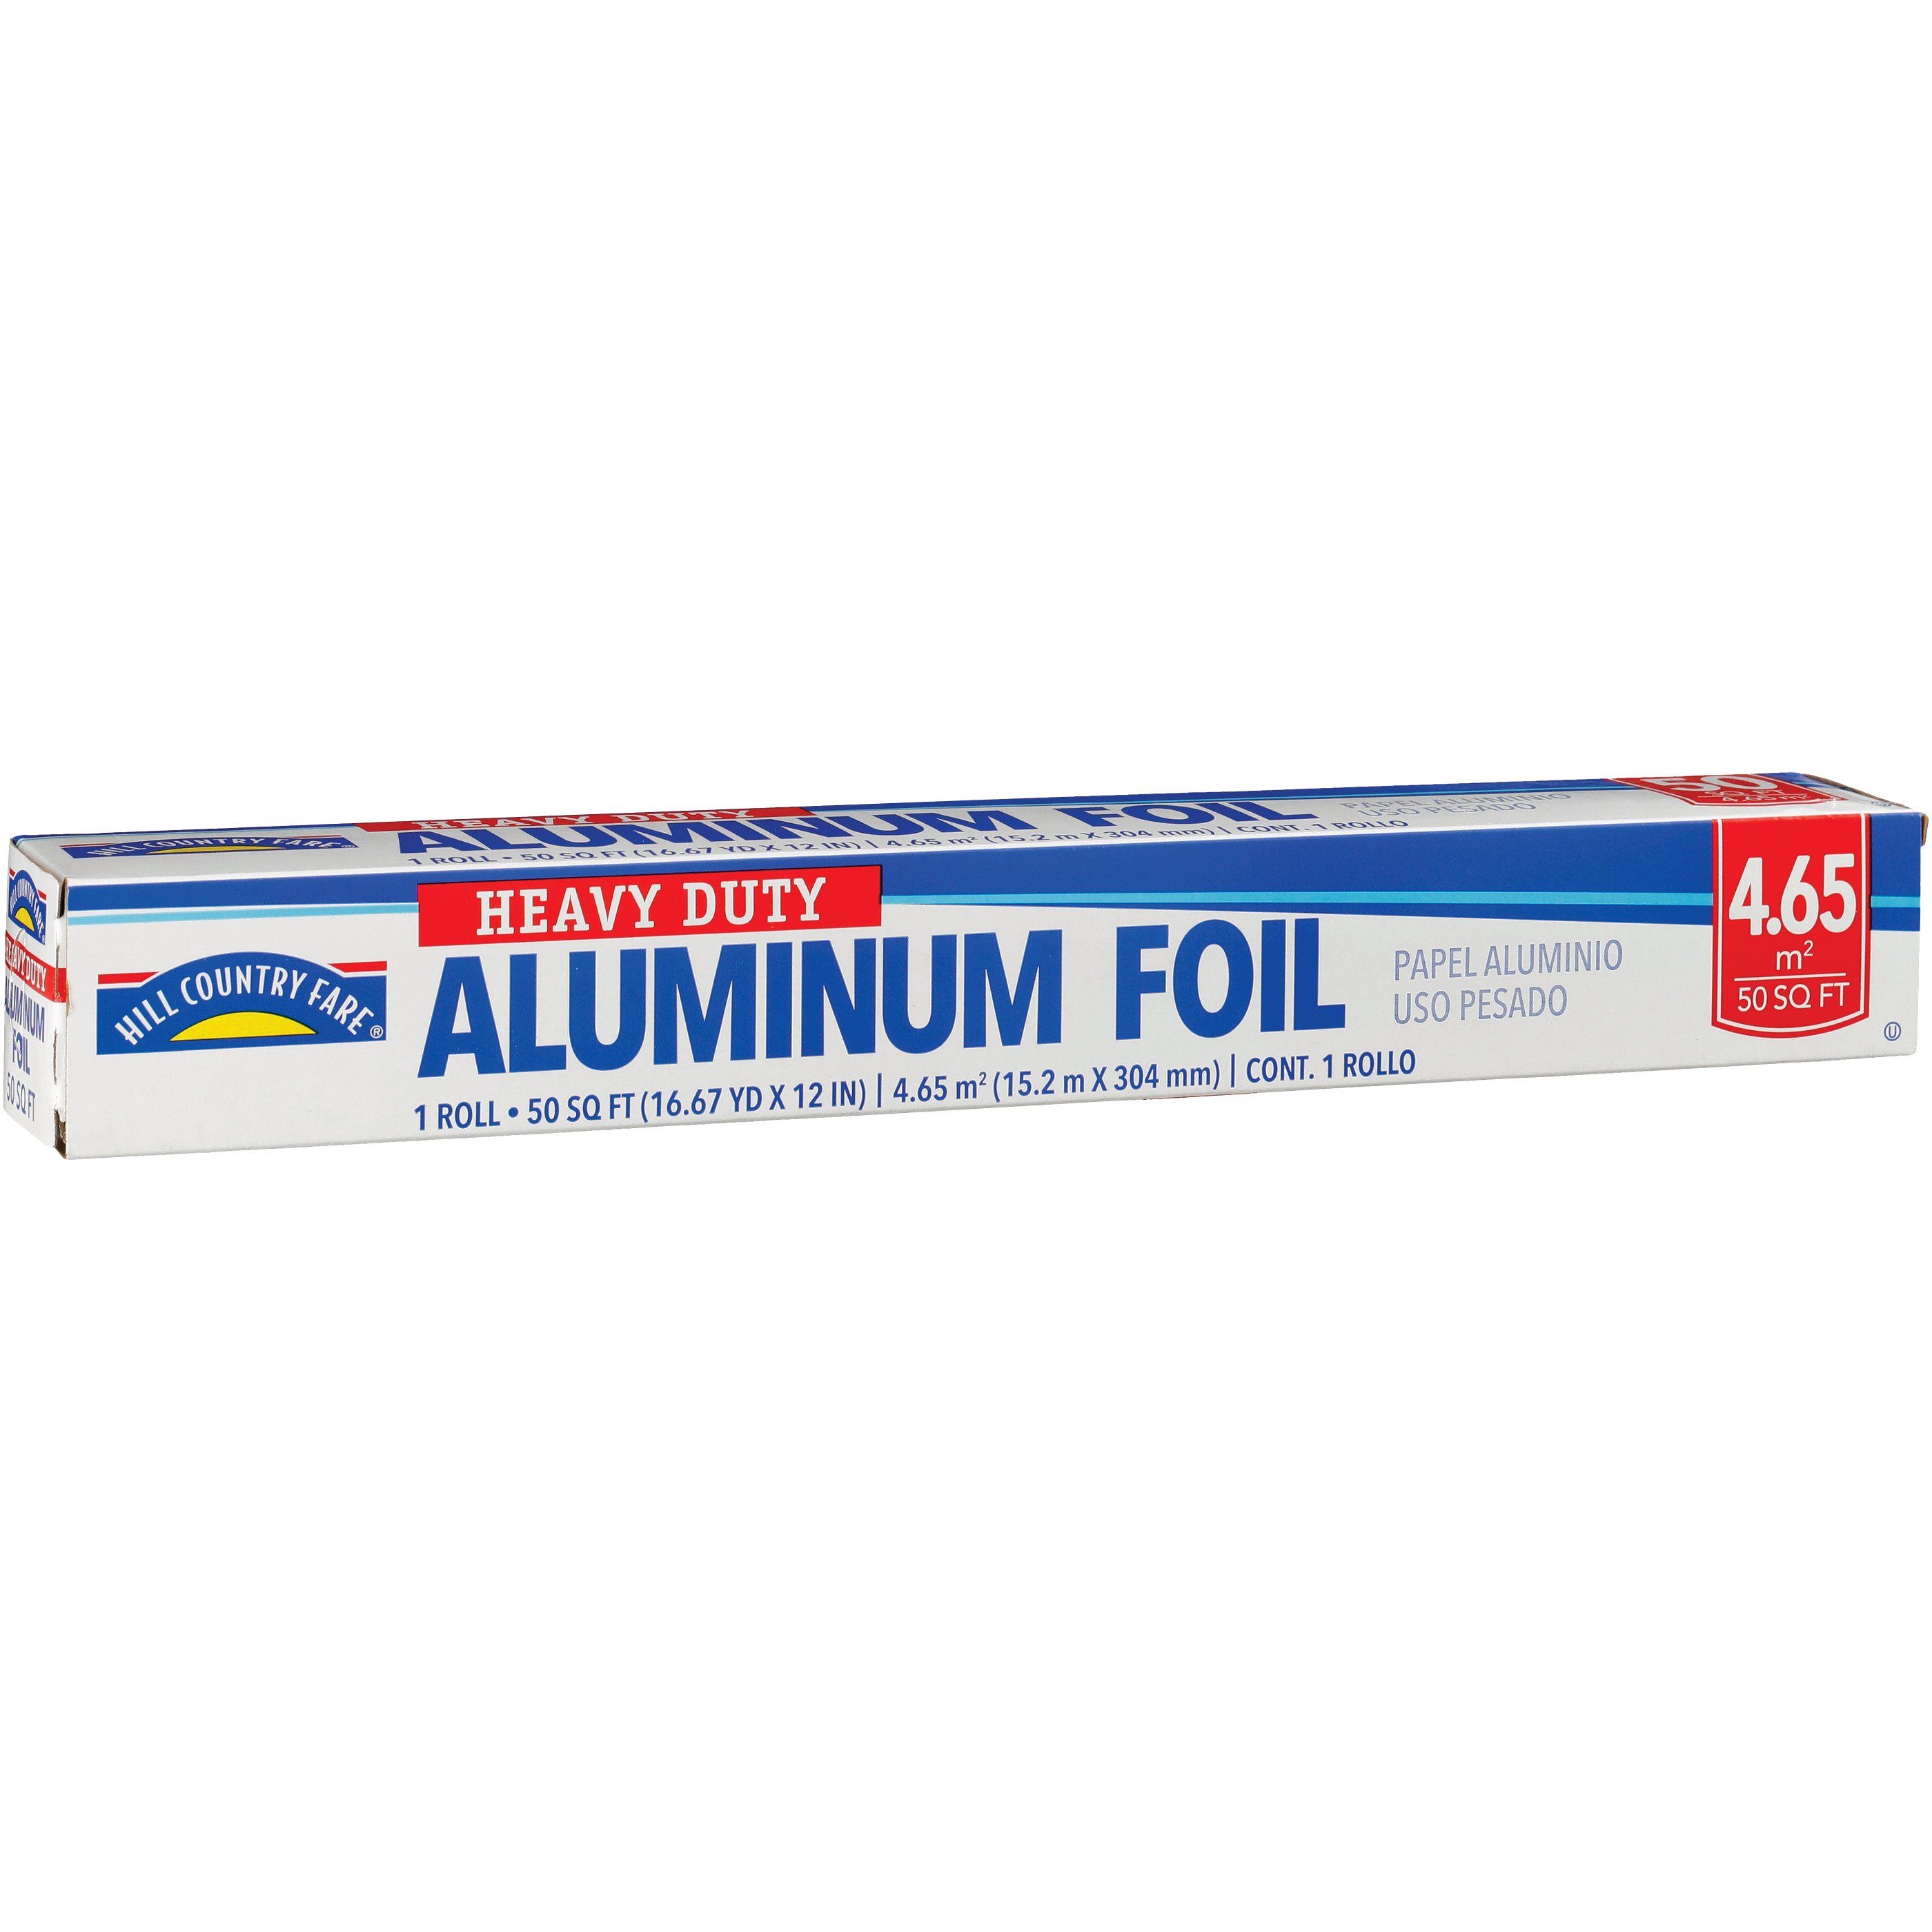 Hill Country Fare Heavy Duty aluminum Foil